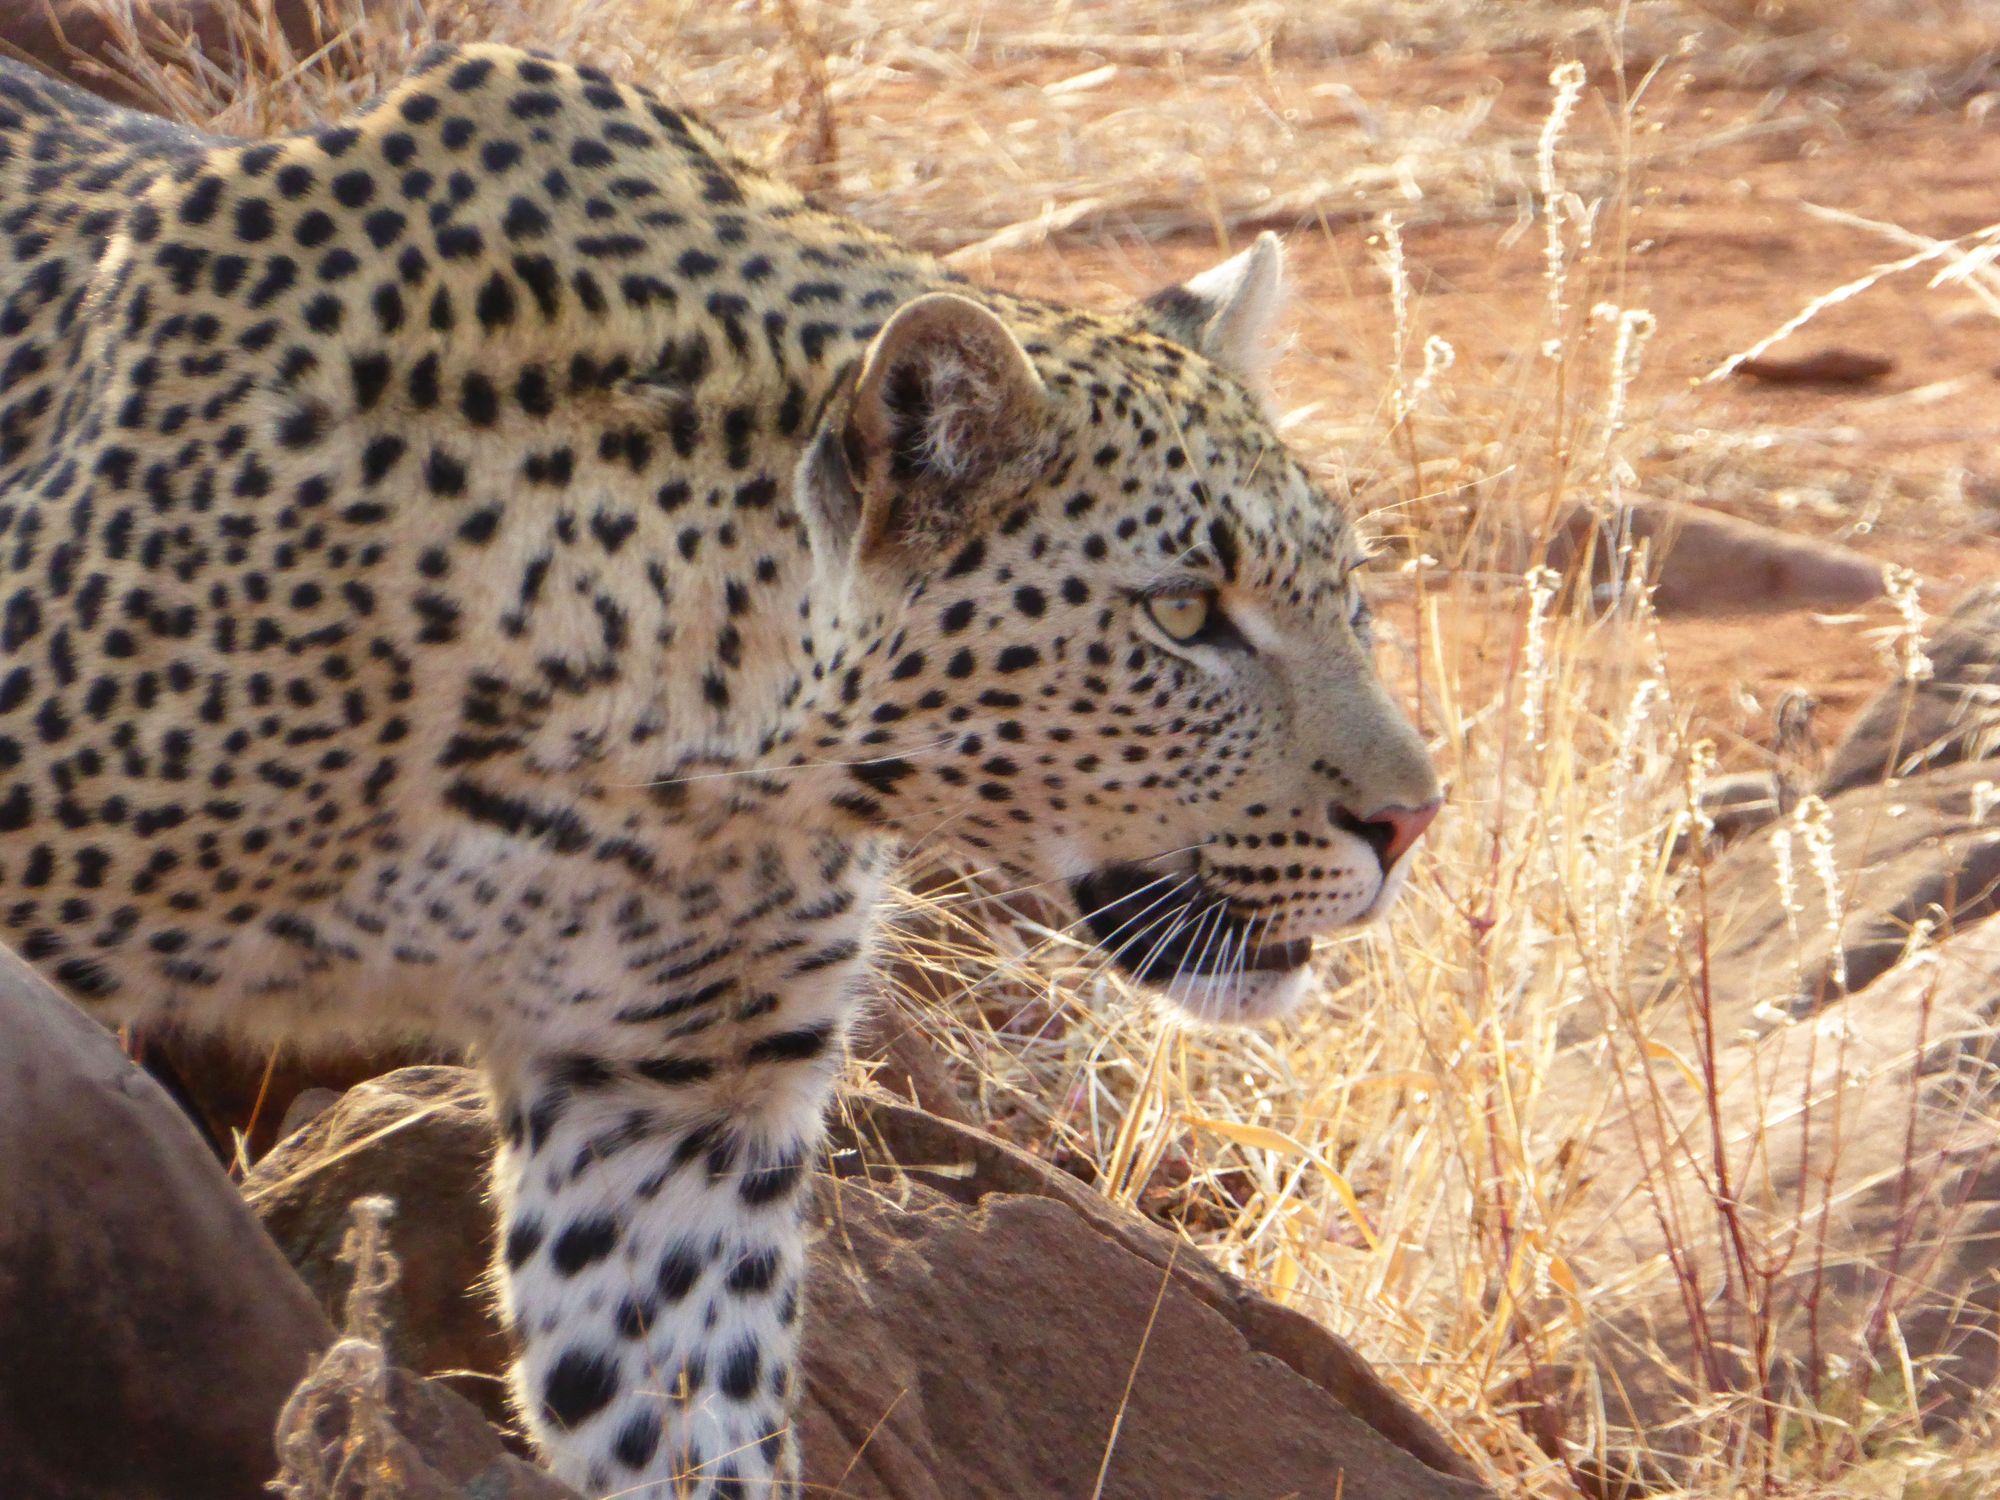 On safari in Madikwe Game Reserve